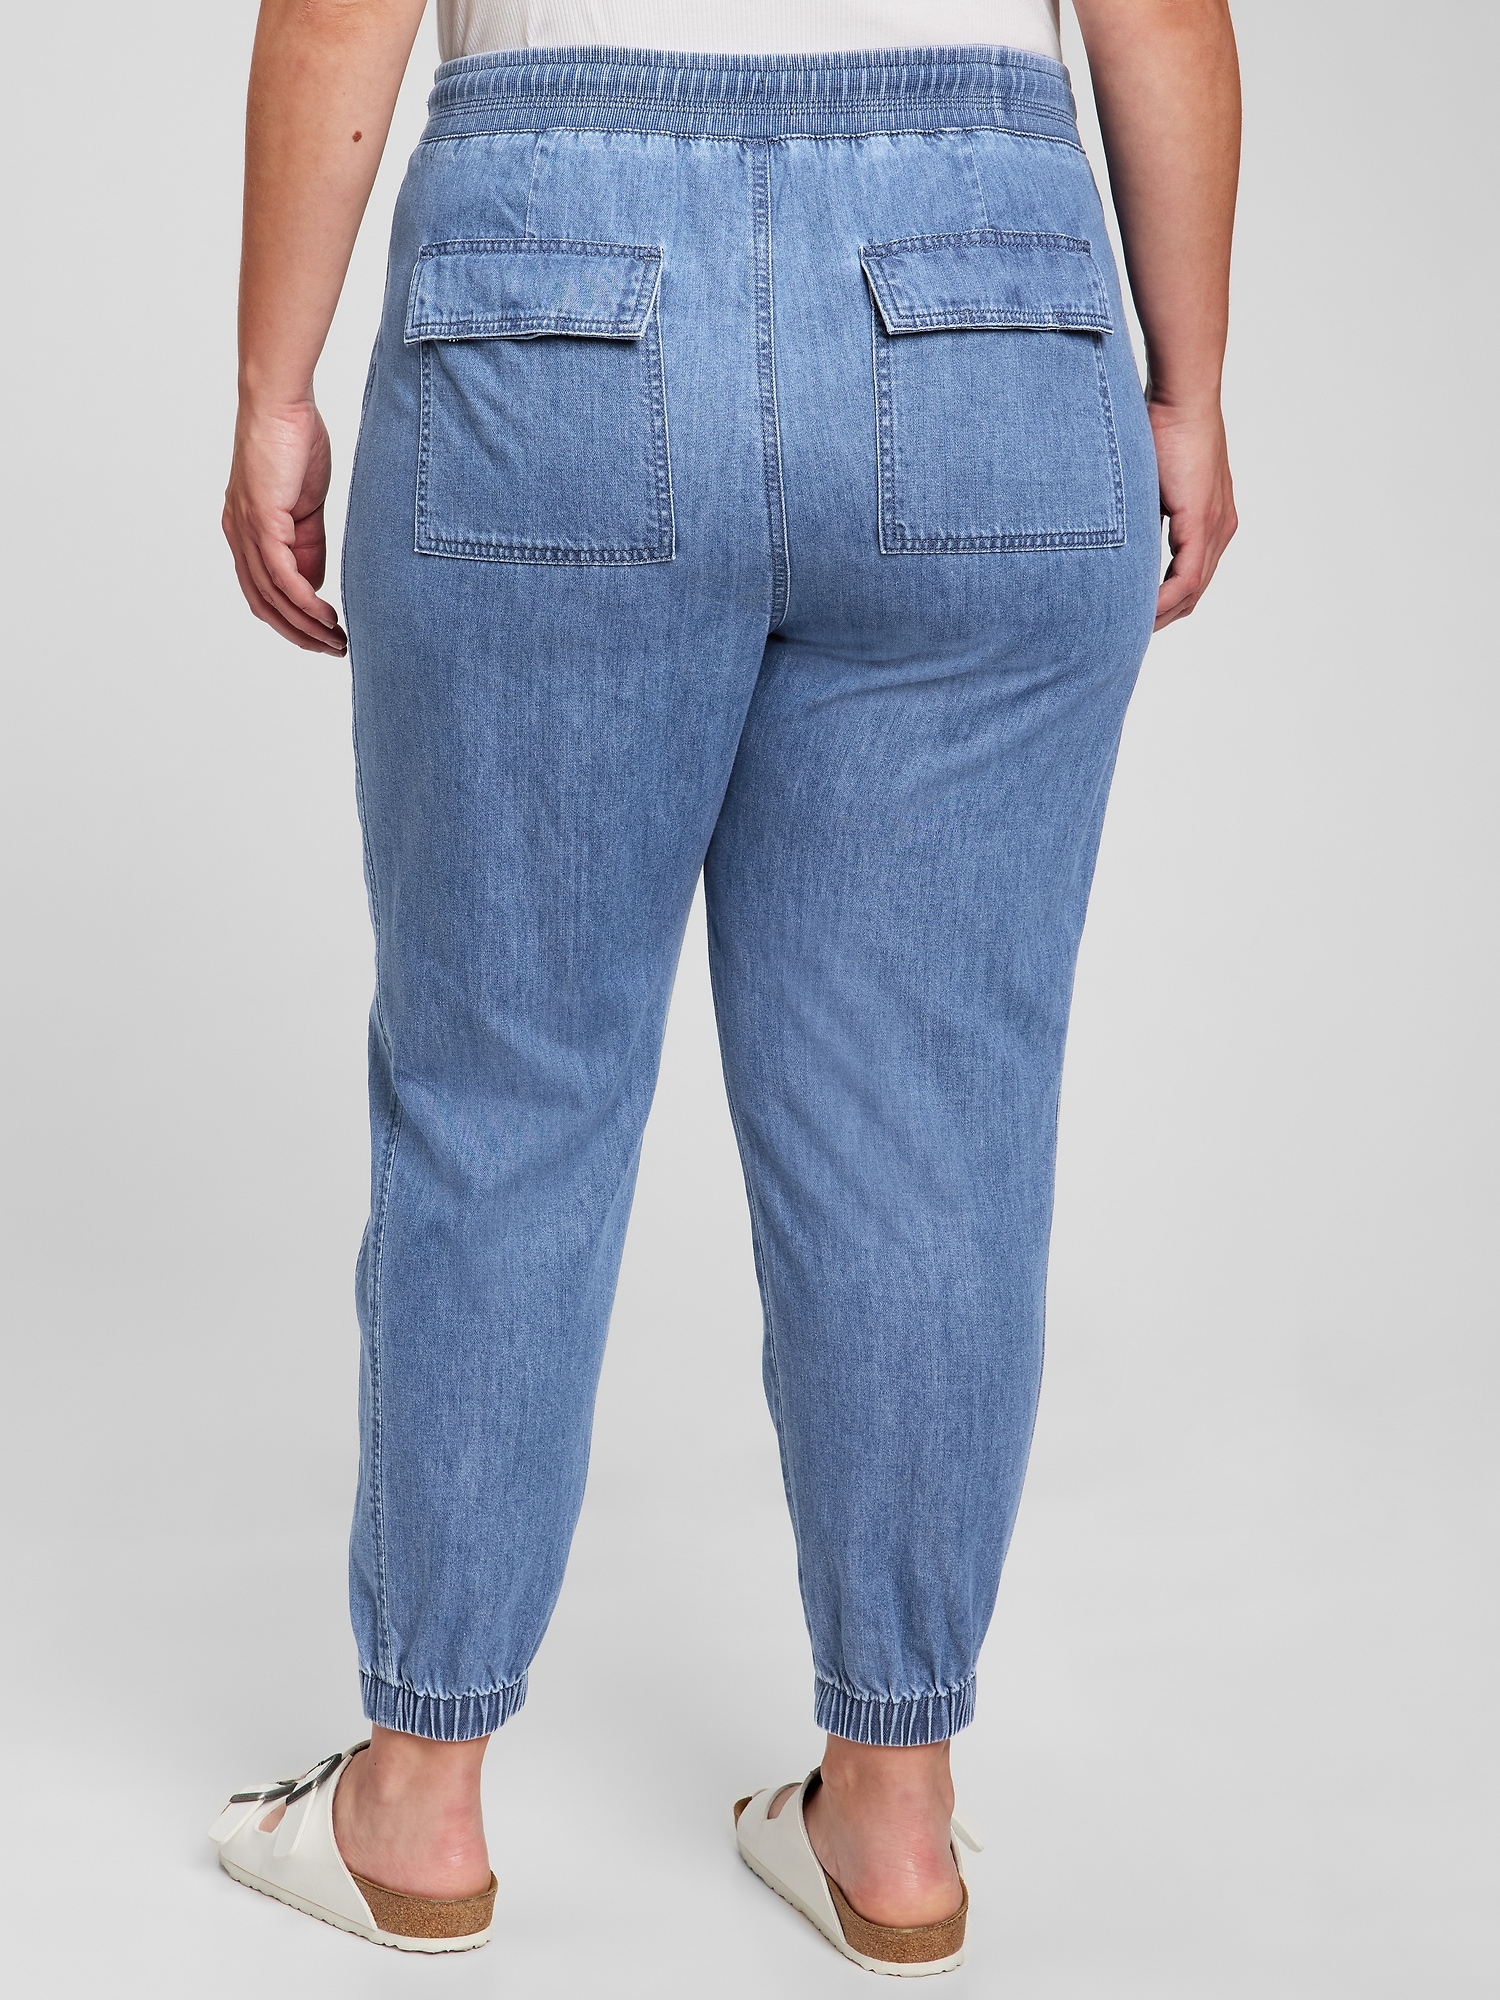 Women Denim Jogger, Jeans (free size for waist all sizes)(blue denim joggers  womens, plus